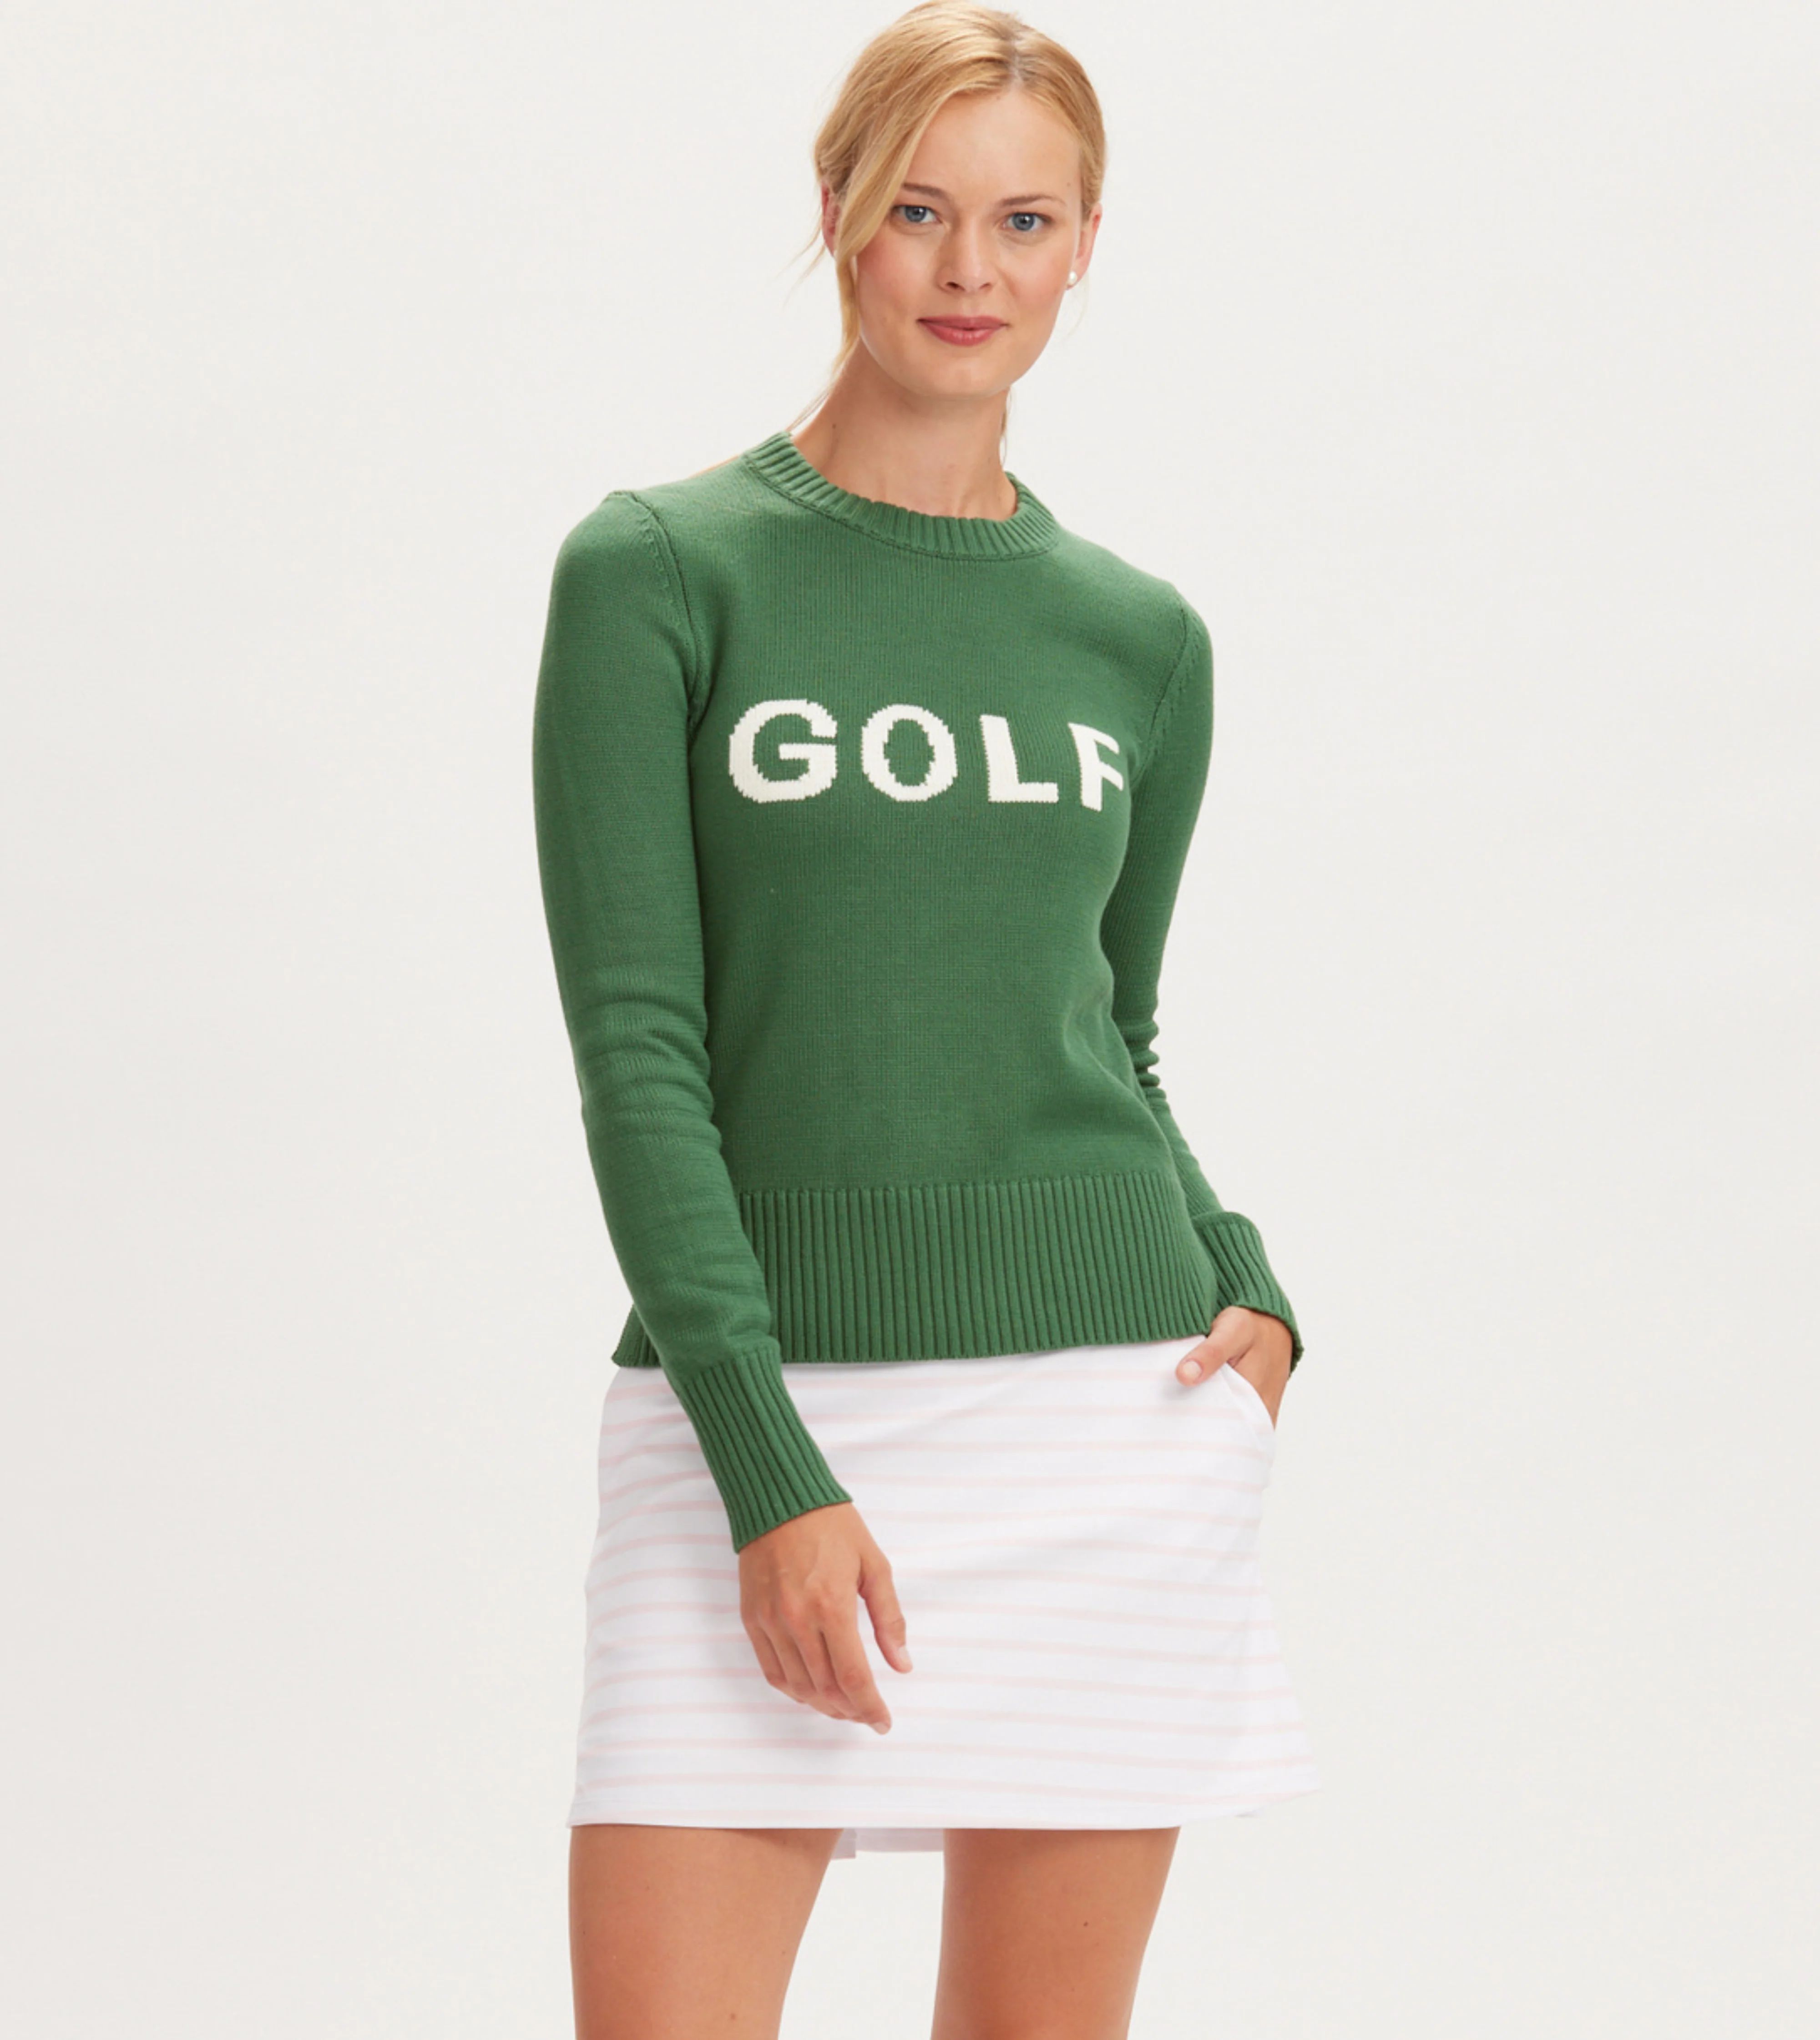 Renwick Golf Sweater | Renwick Golf